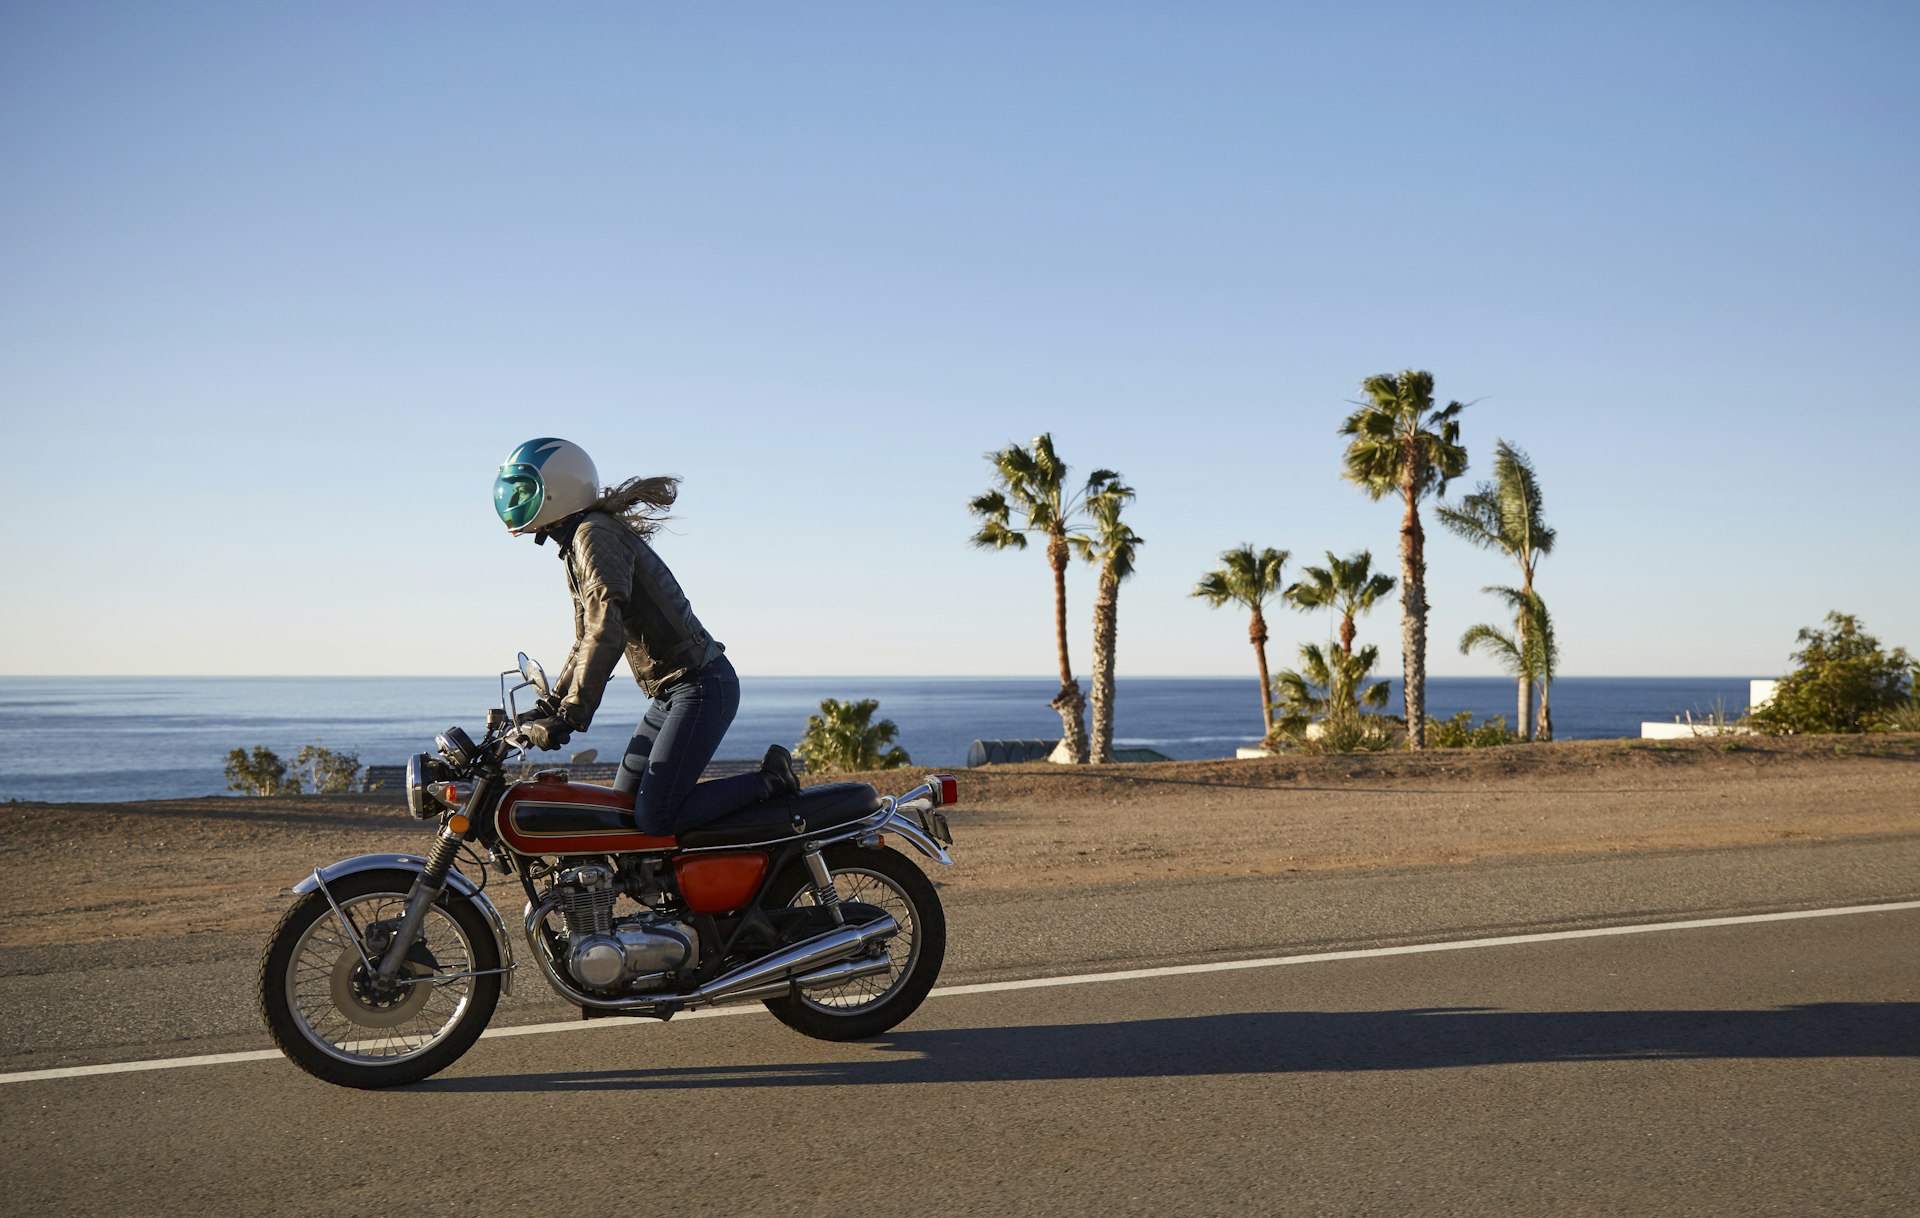 Young woman riding motorcycle on empty Malibu coastline road